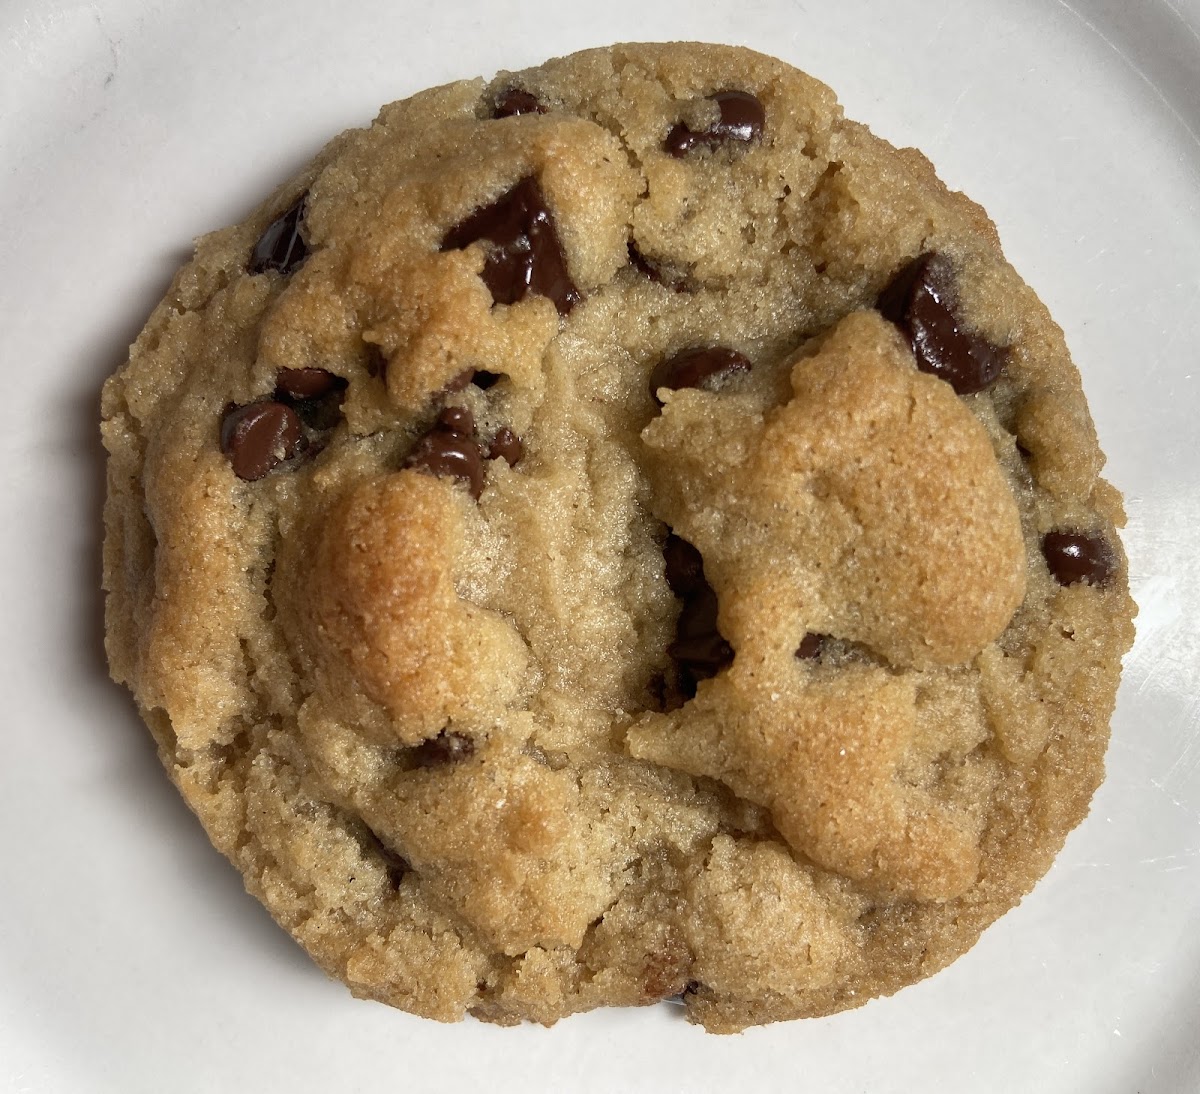 Chocolate chip cookie perfection - no top 9 allergen ingredients, gluten free and vegan